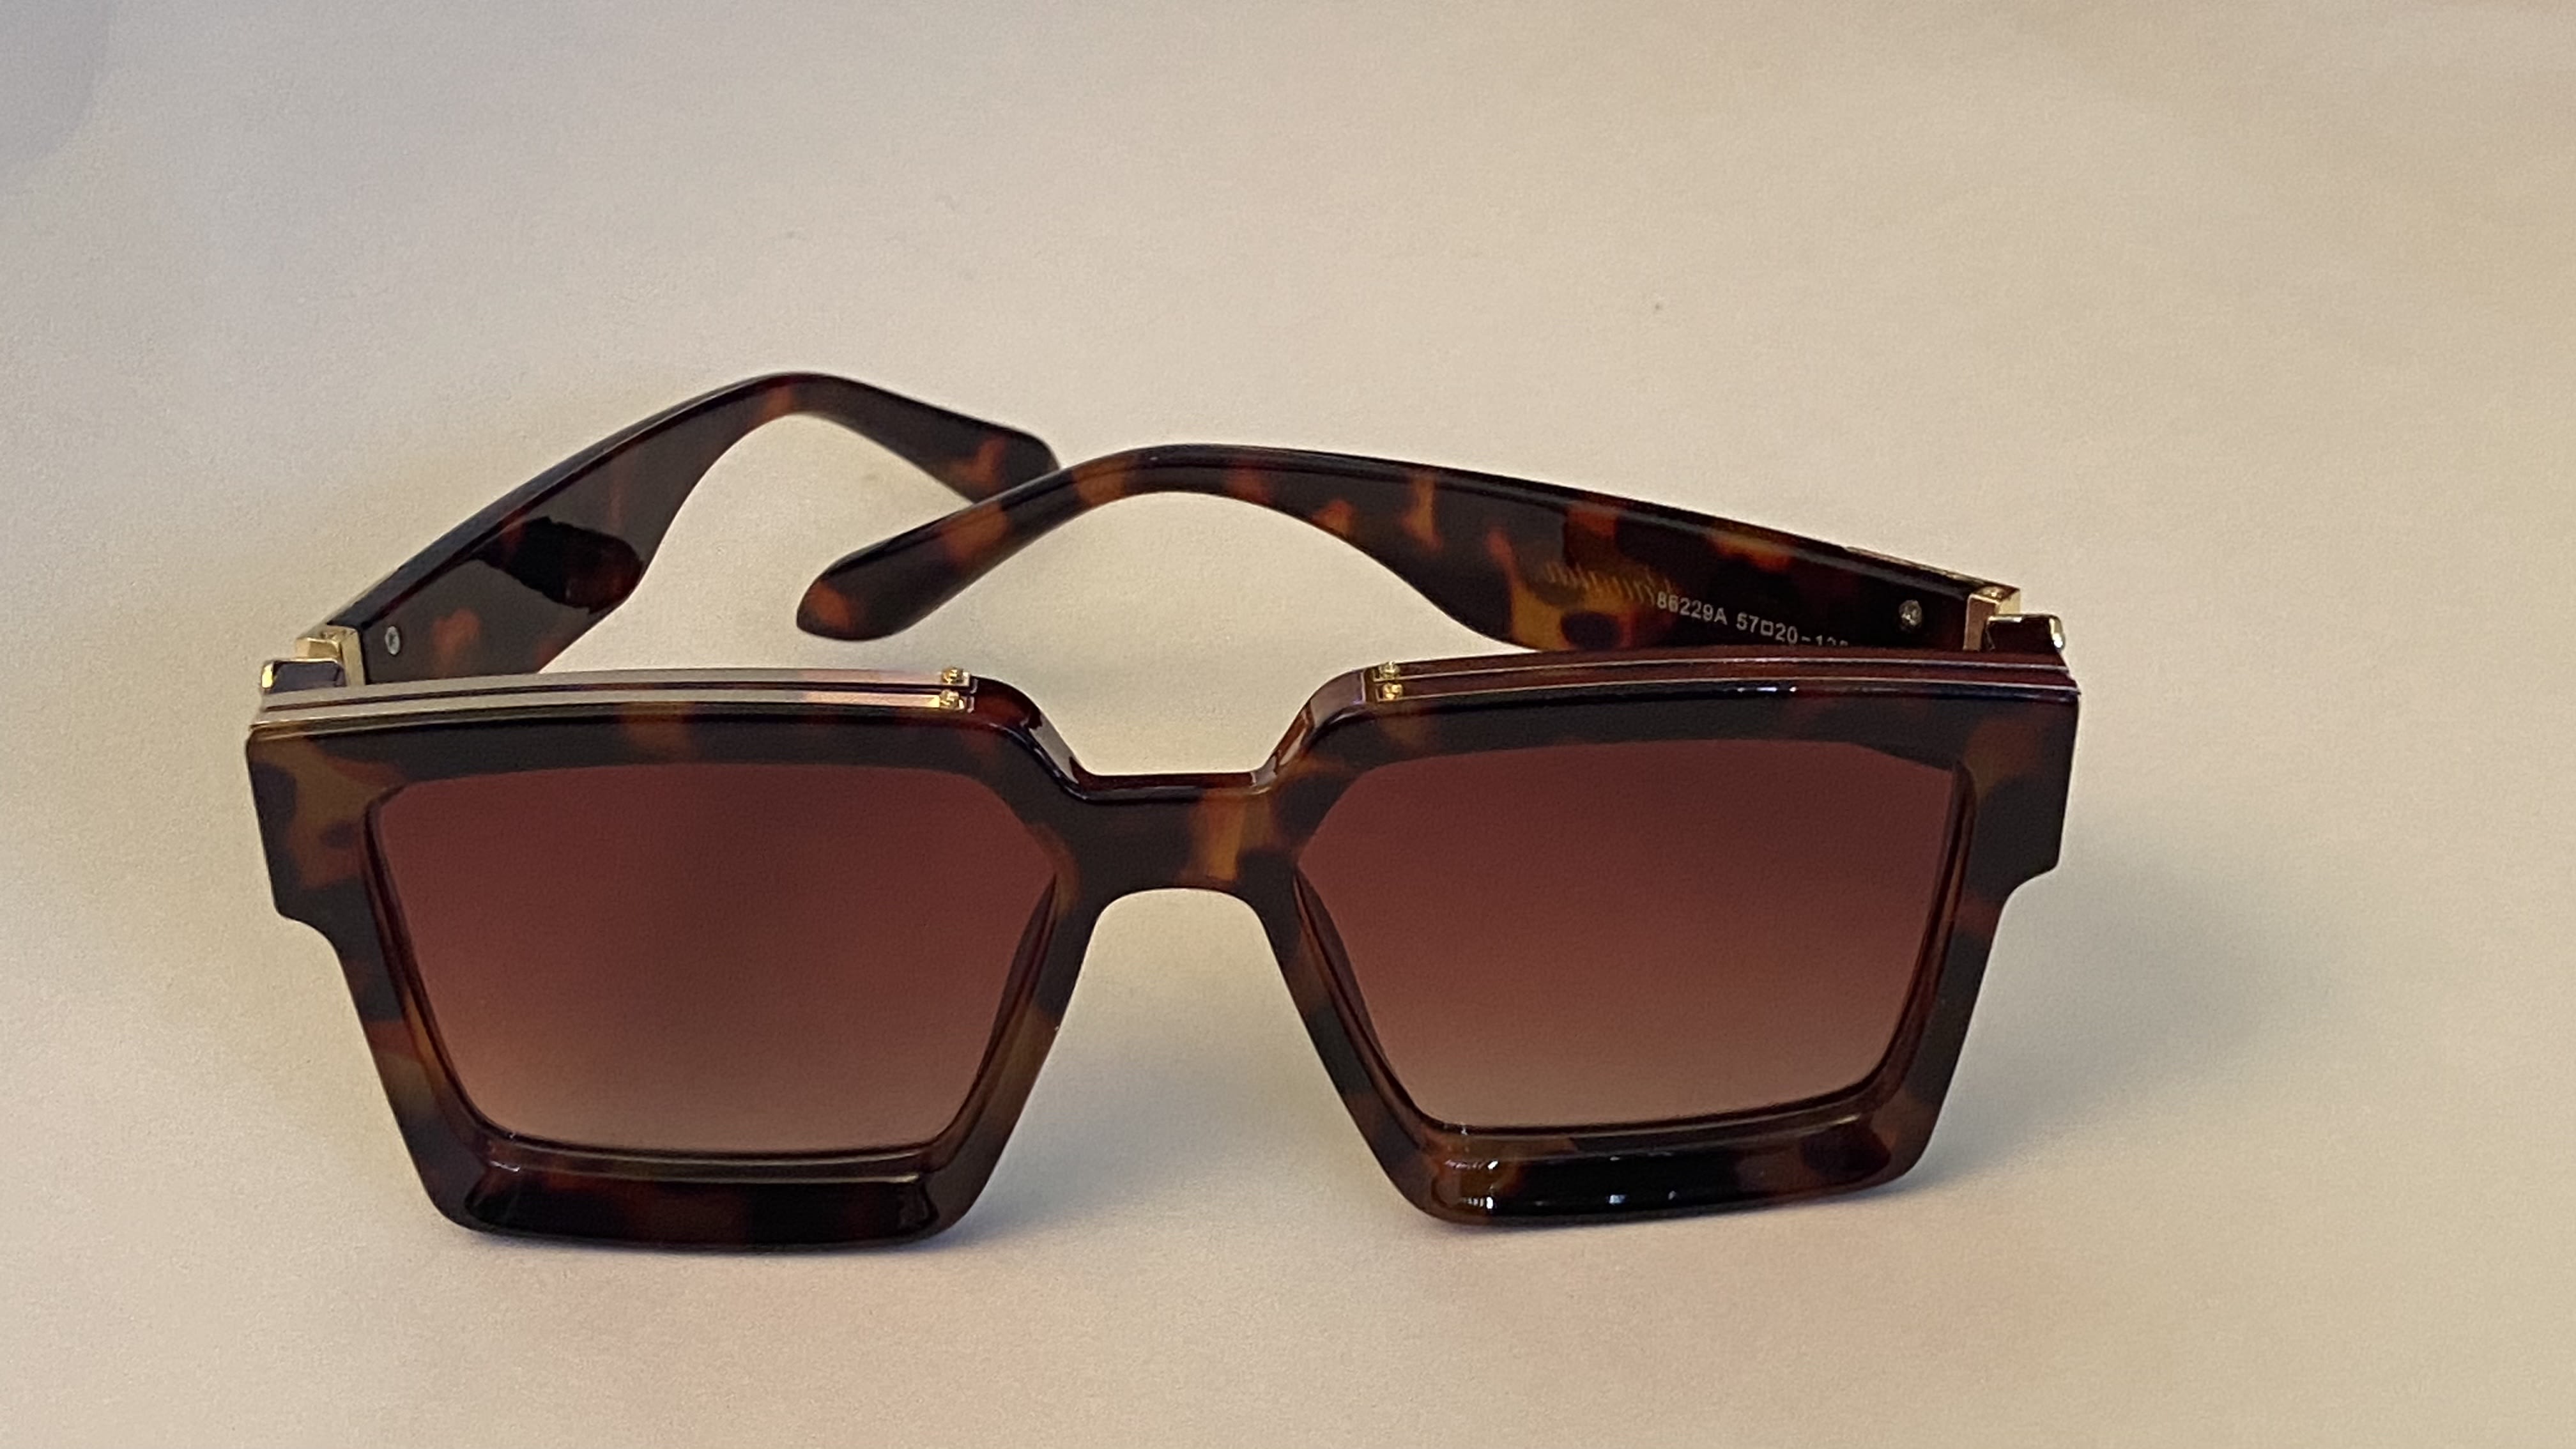 Long Sunglasses #7 - Millionaire SunGlasses - My Millionaire Sunglasses